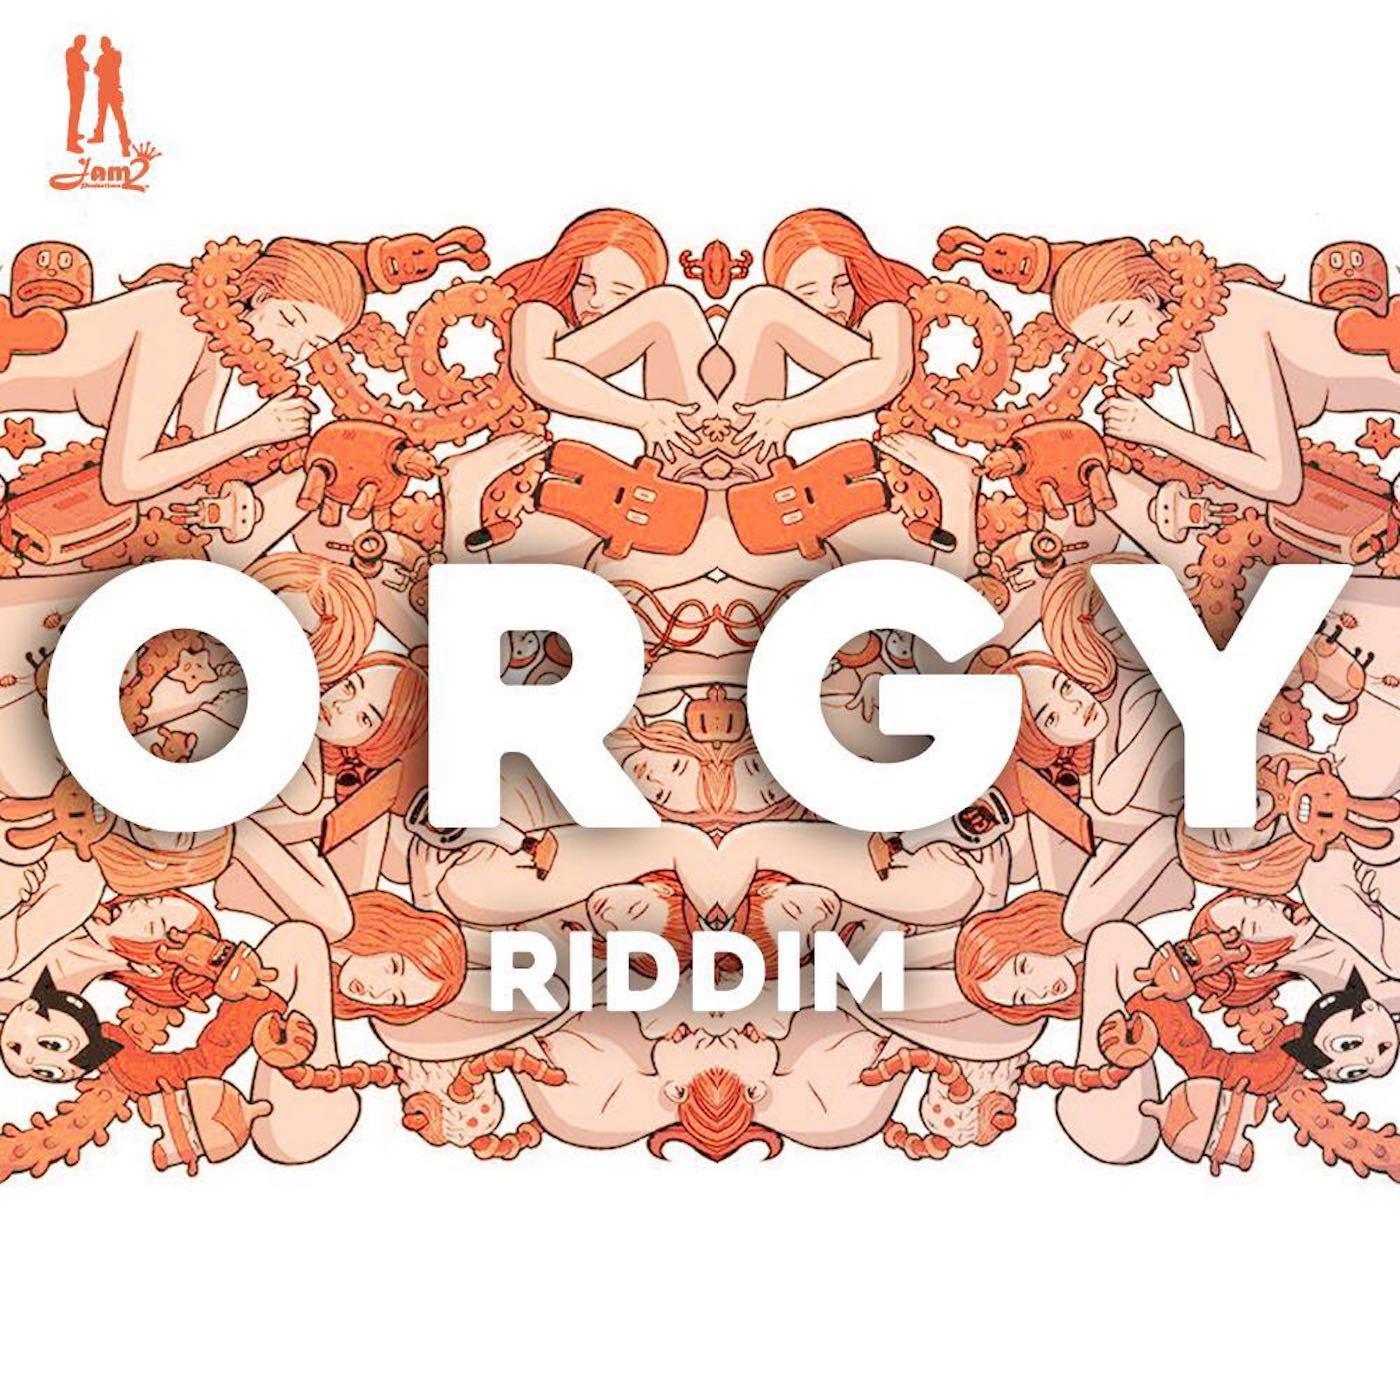 Orgy Riddim